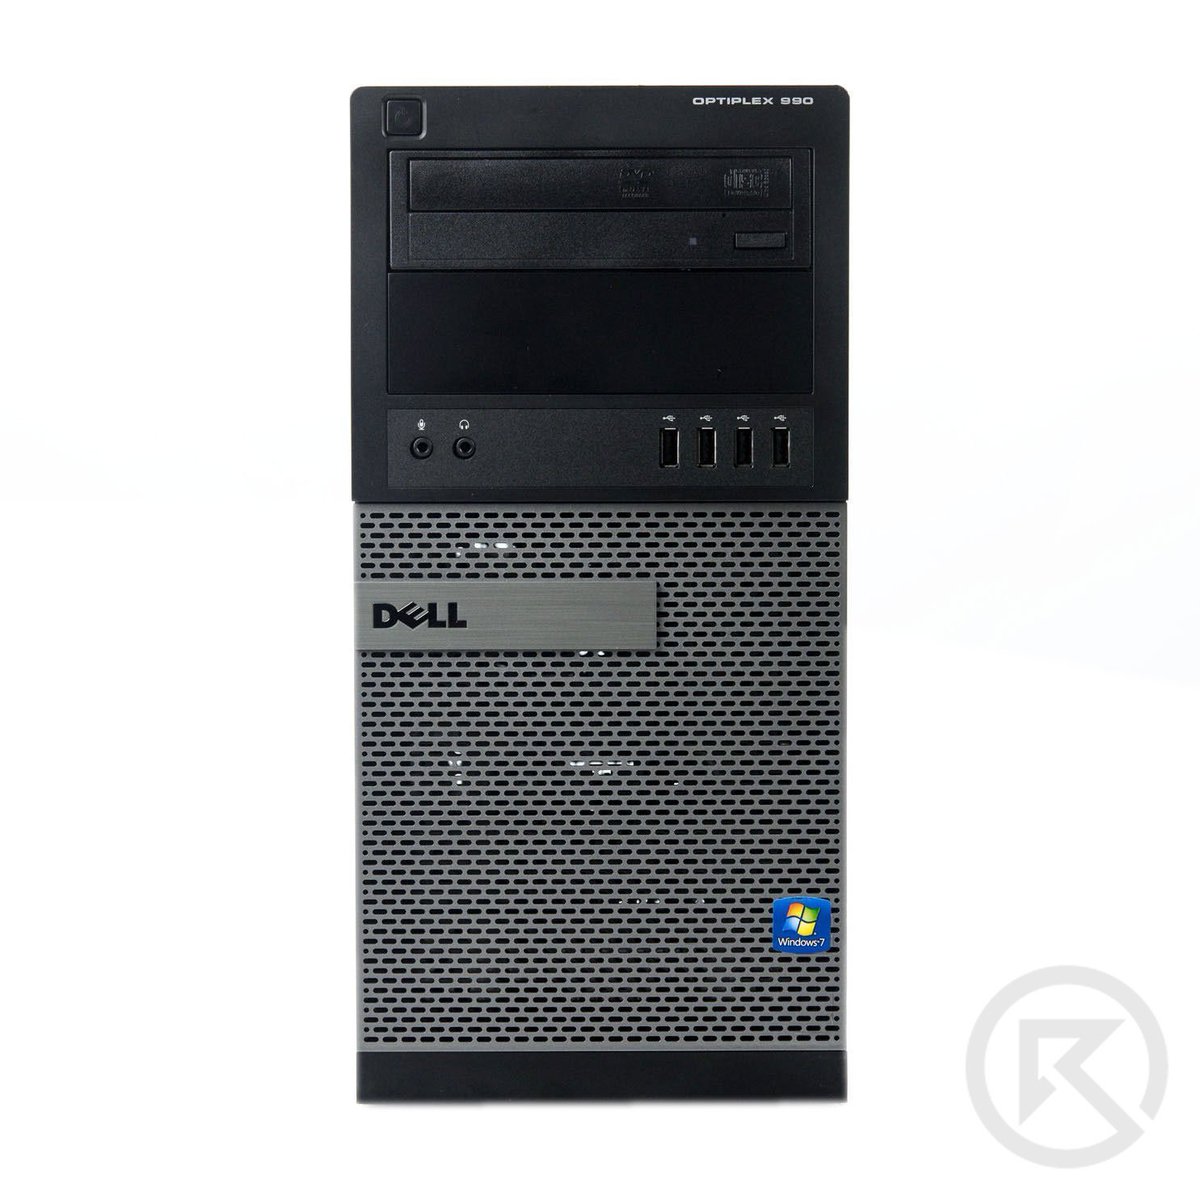 Dell Optiplex 990 Intel Core I5 2nd Generation Full Size Desktop 

$146.43 

Get Yours @ tinyurl.com/y3pk38rf

#refurbishedpc #refurbishedcomputersnearme